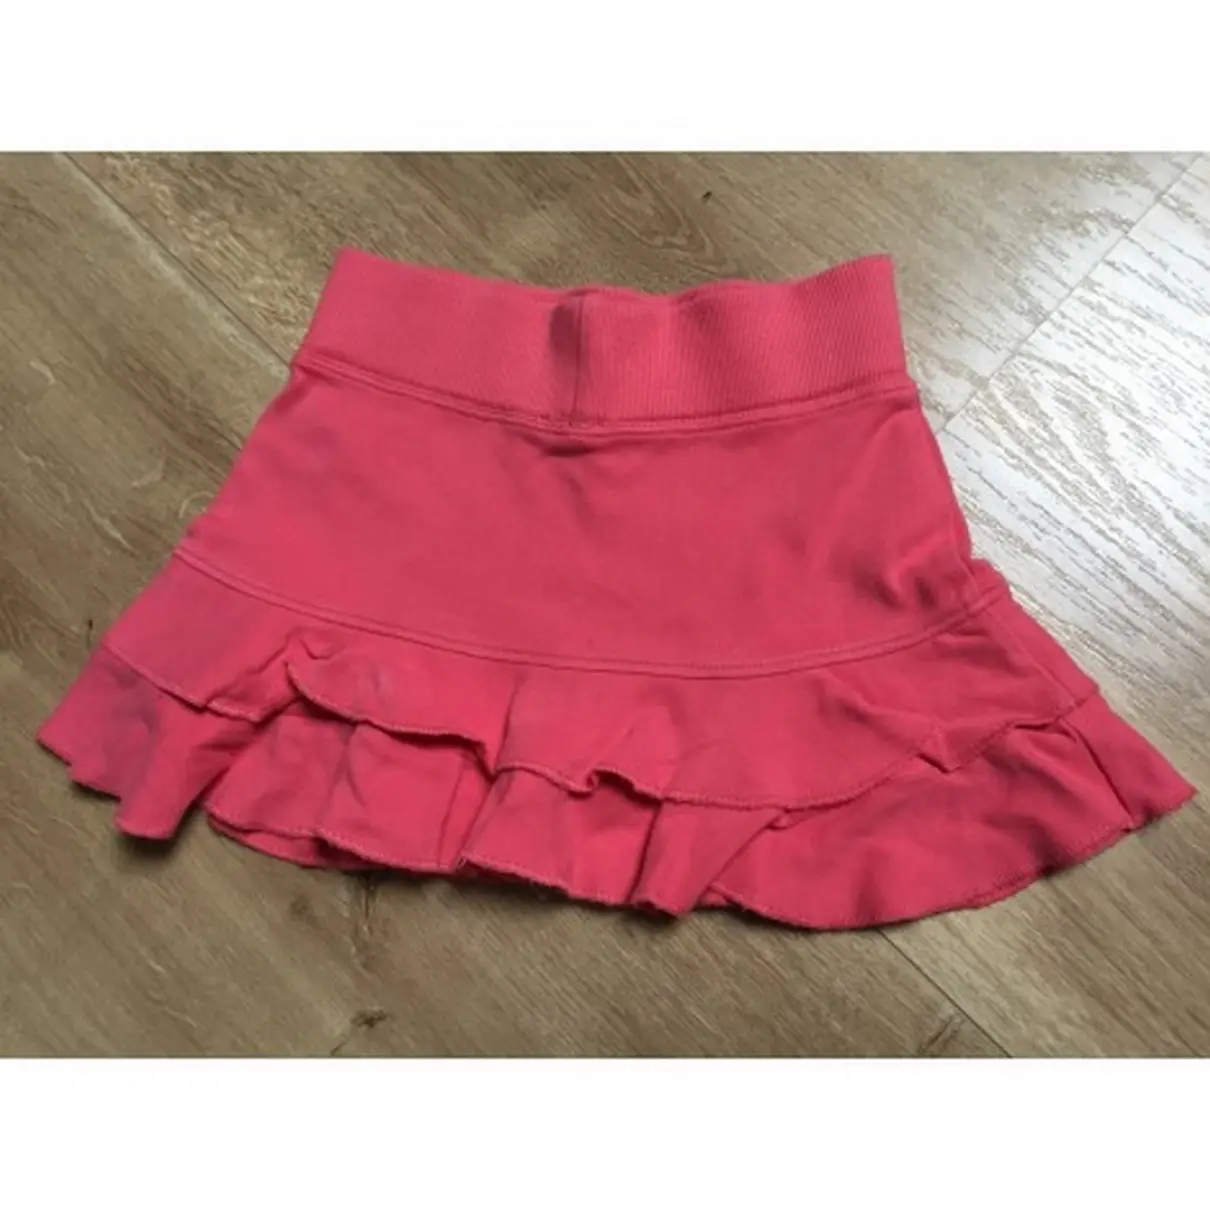 Buy Repetto Skirt online